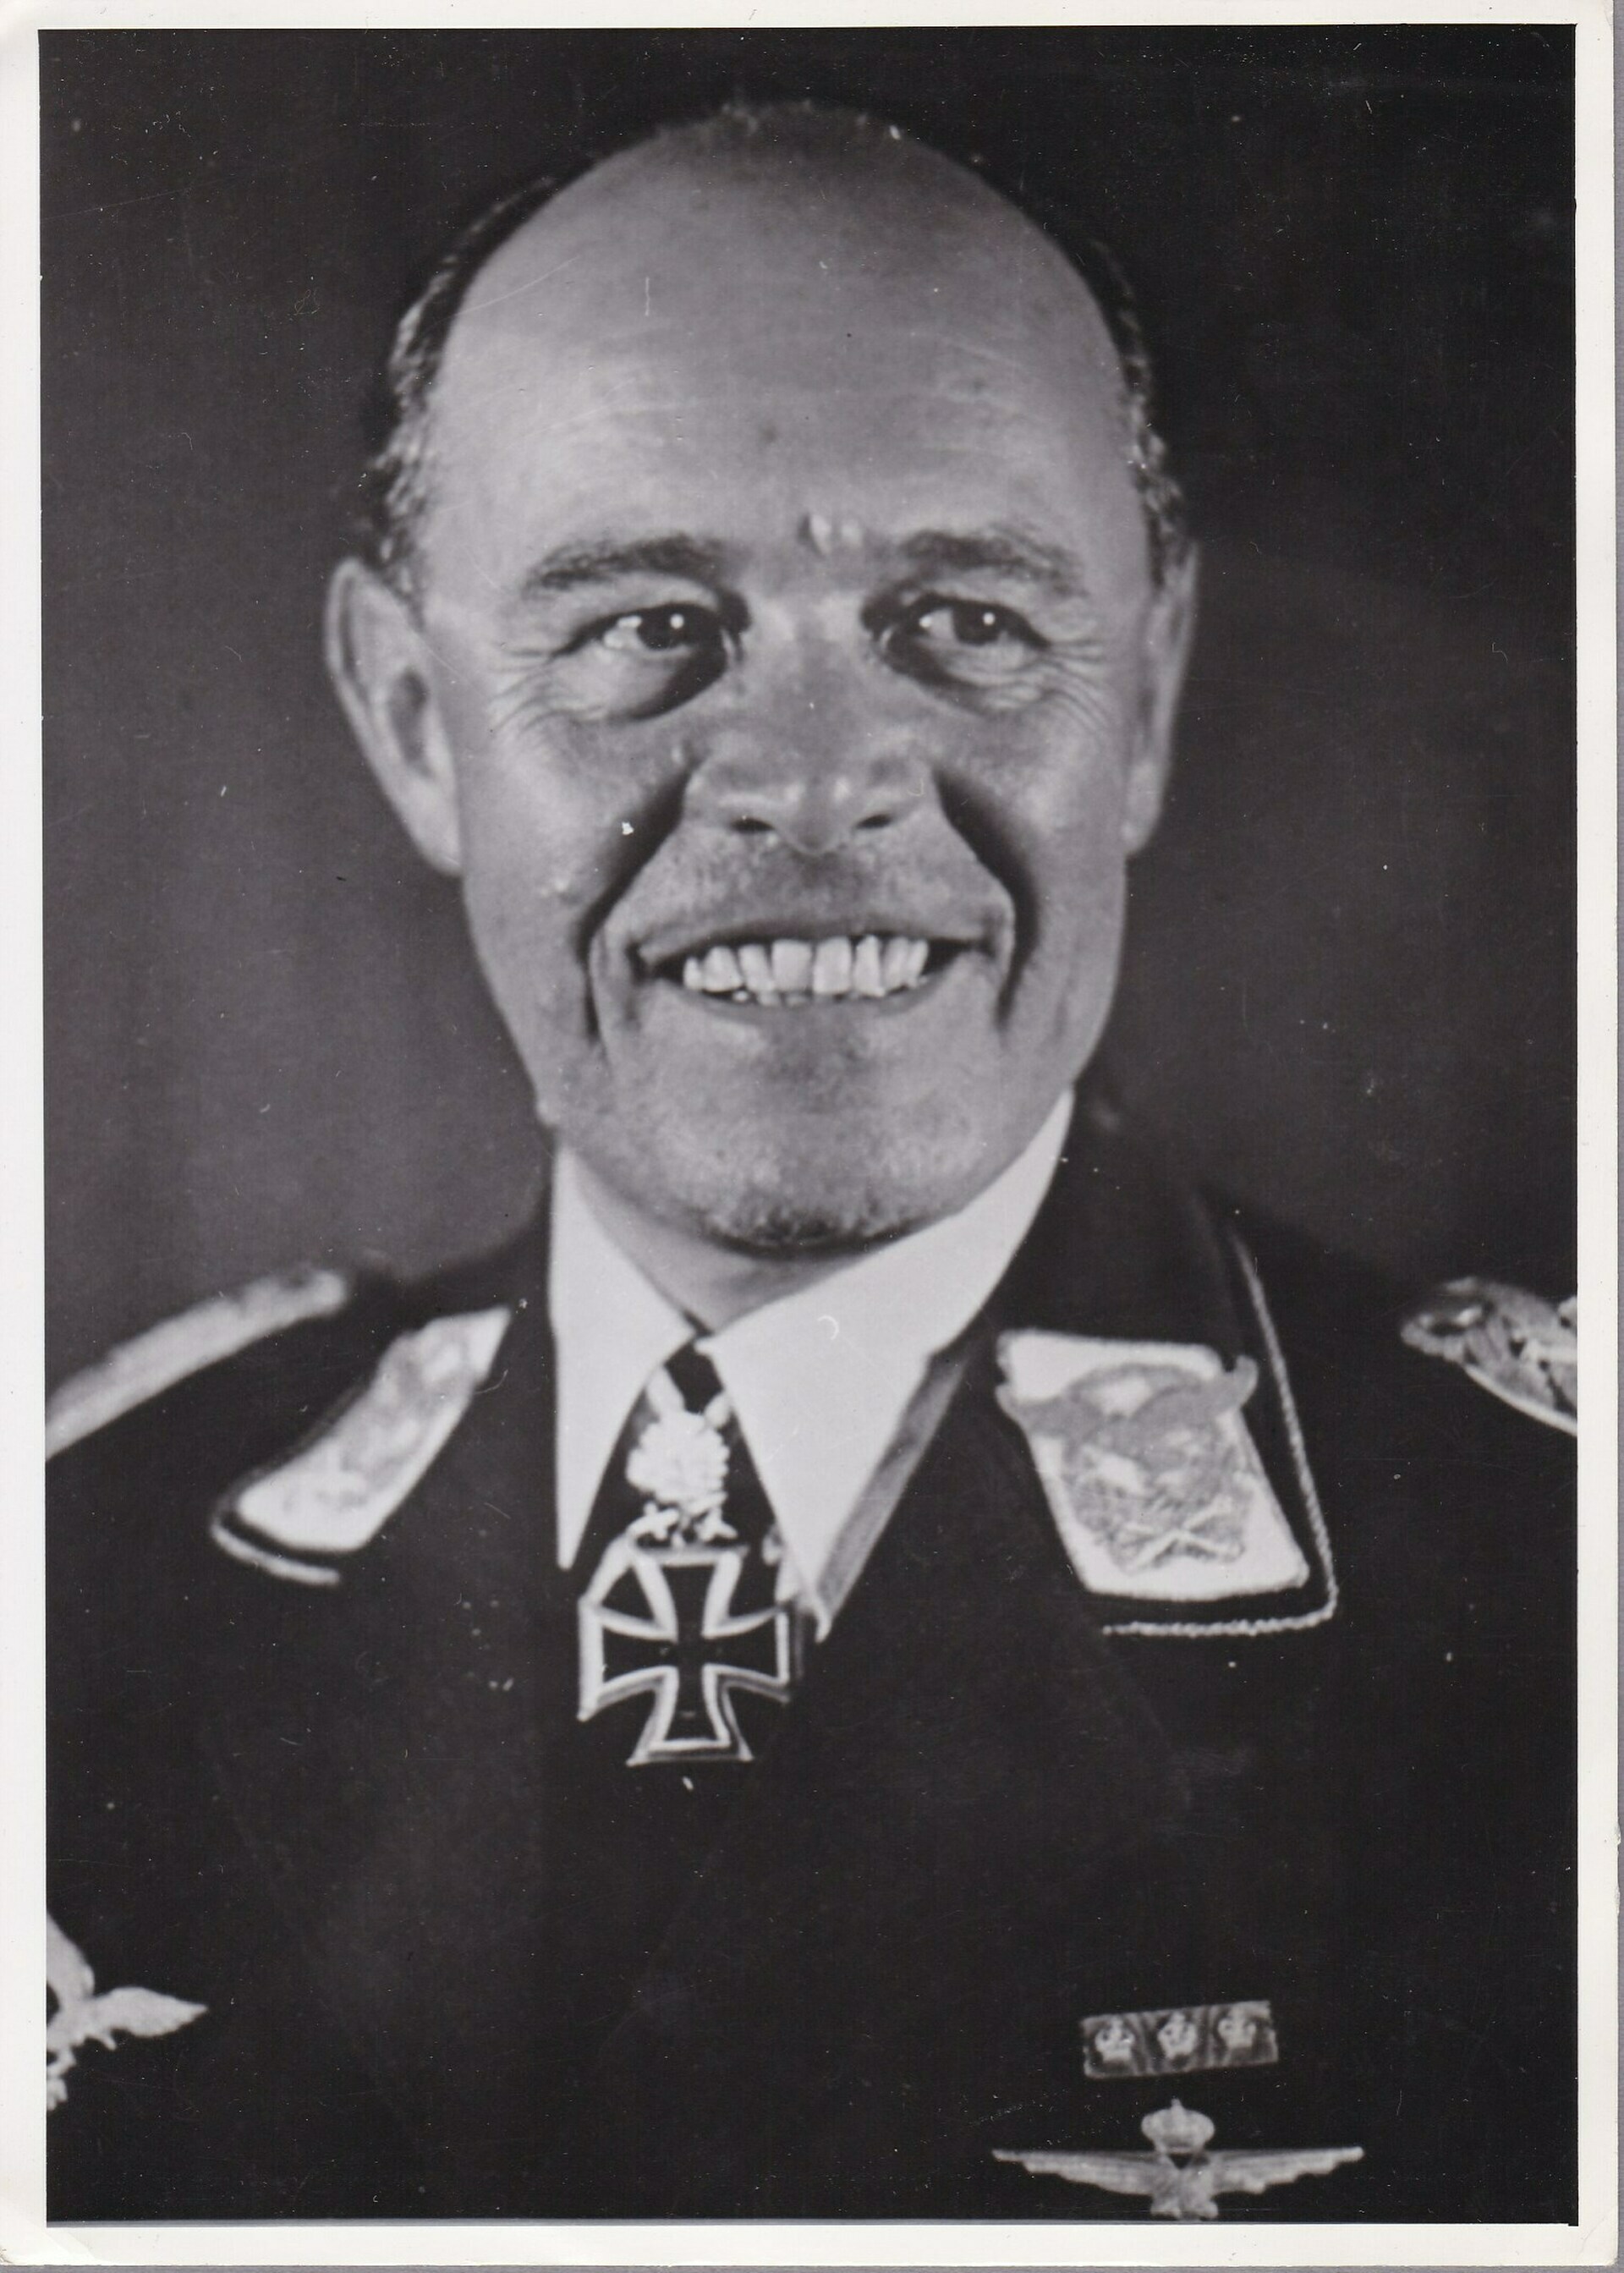 Press photo of Generalfeldmarschall Kesselring